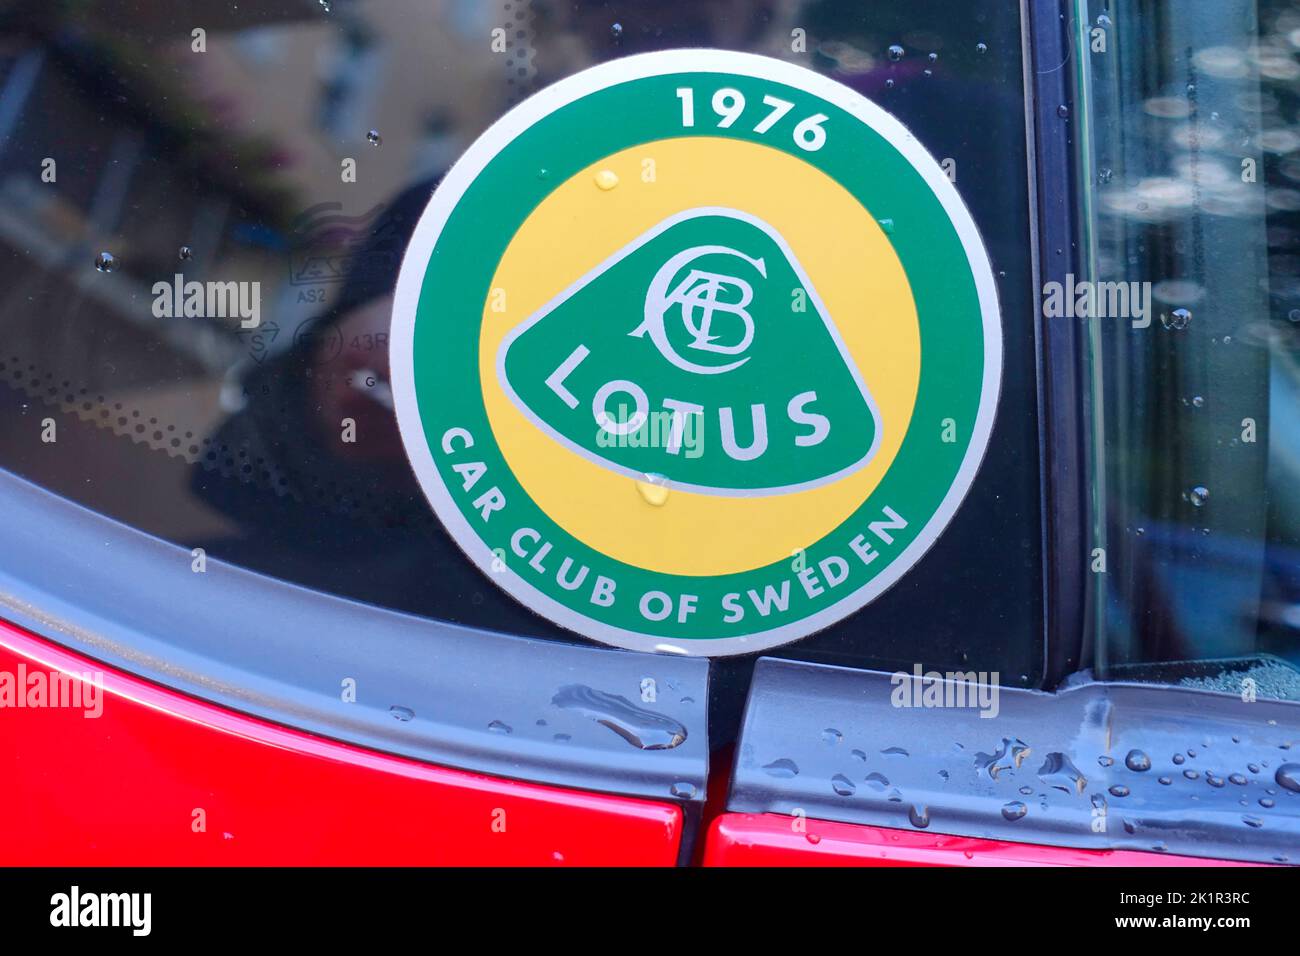 Lotus vehicle, 1976 Car Club of Sweden Stock Photo